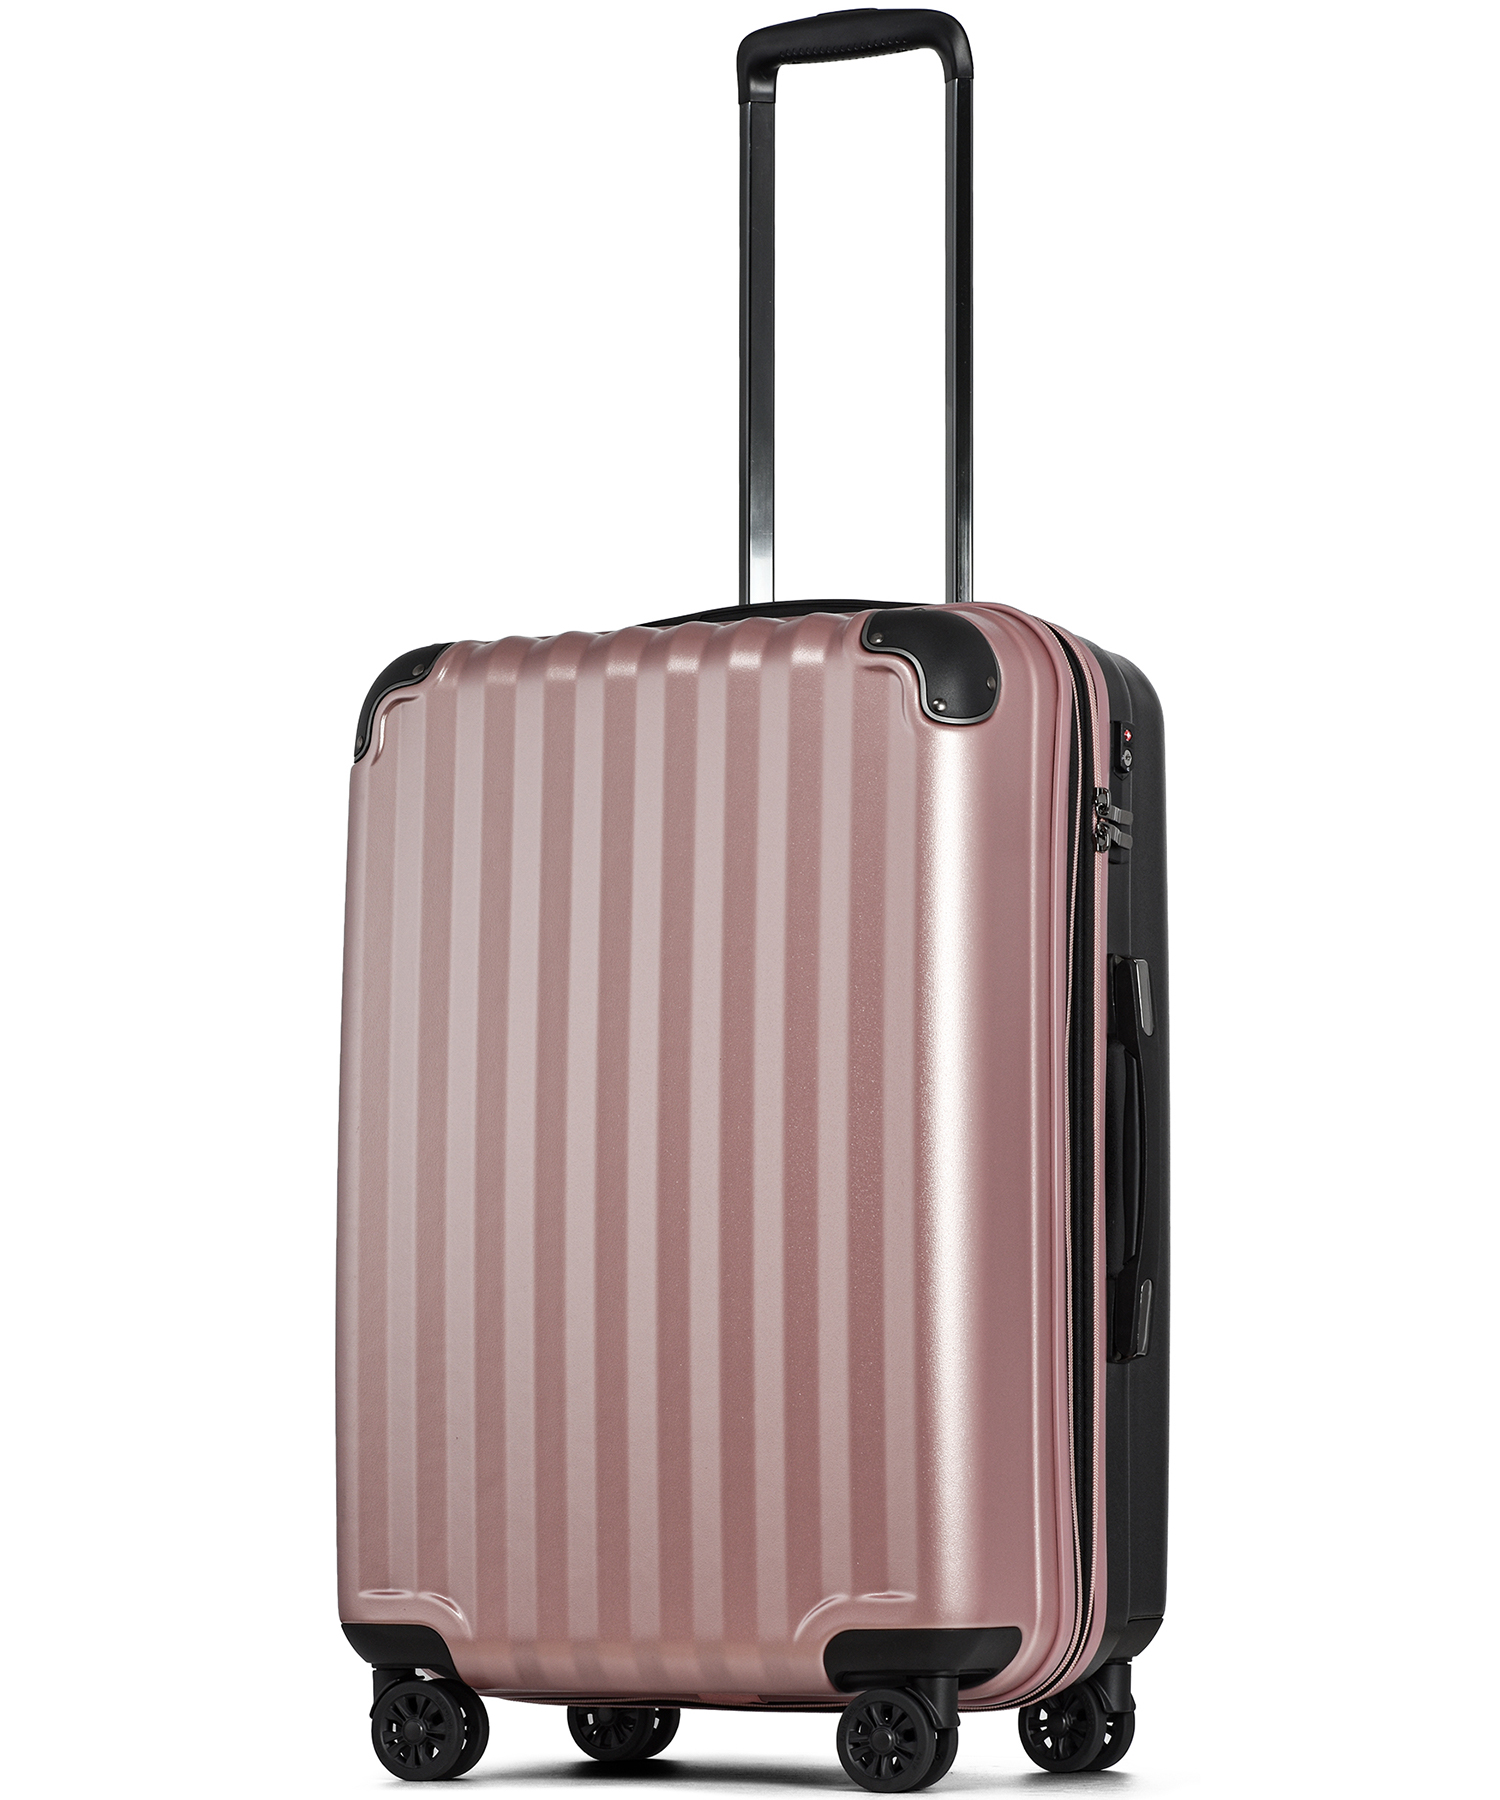 JP－Design】スーツケース LMサイズ 静音8輪キャスター 軽量 大容量